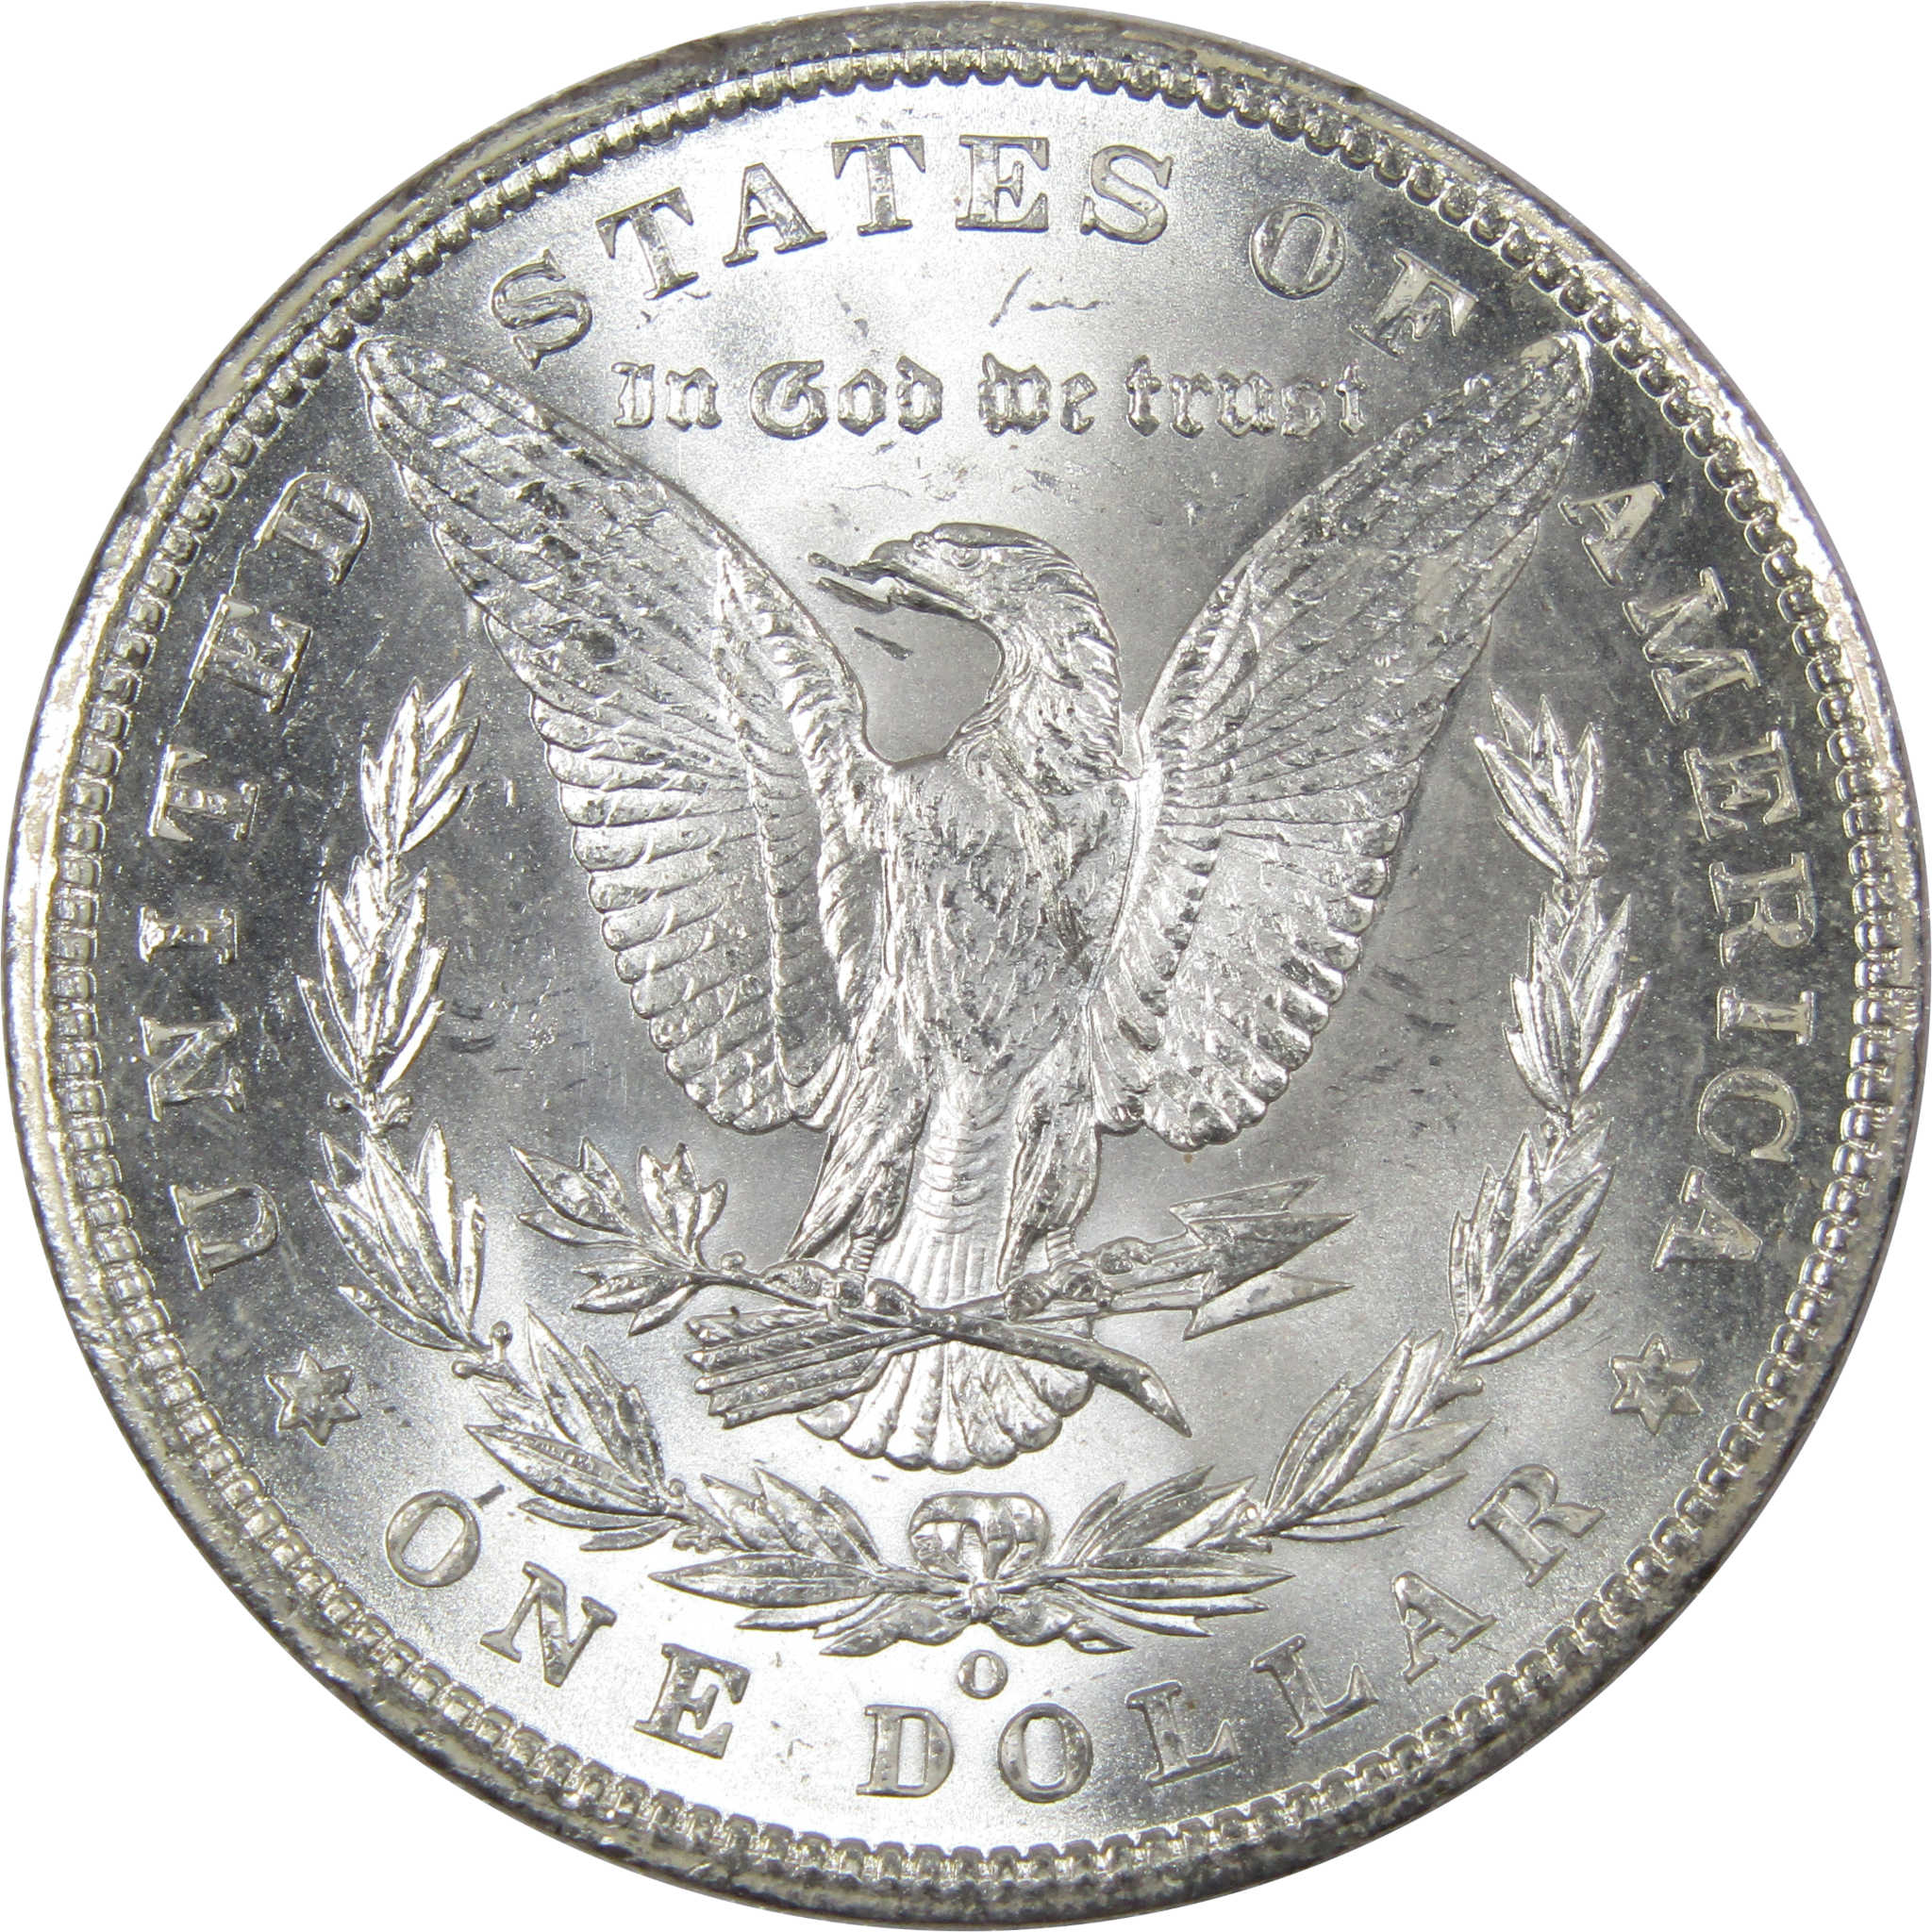 1900 O Morgan Dollar BU Uncirculated Mint State 90% Silver SKU:IPC9738 - Morgan coin - Morgan silver dollar - Morgan silver dollar for sale - Profile Coins &amp; Collectibles